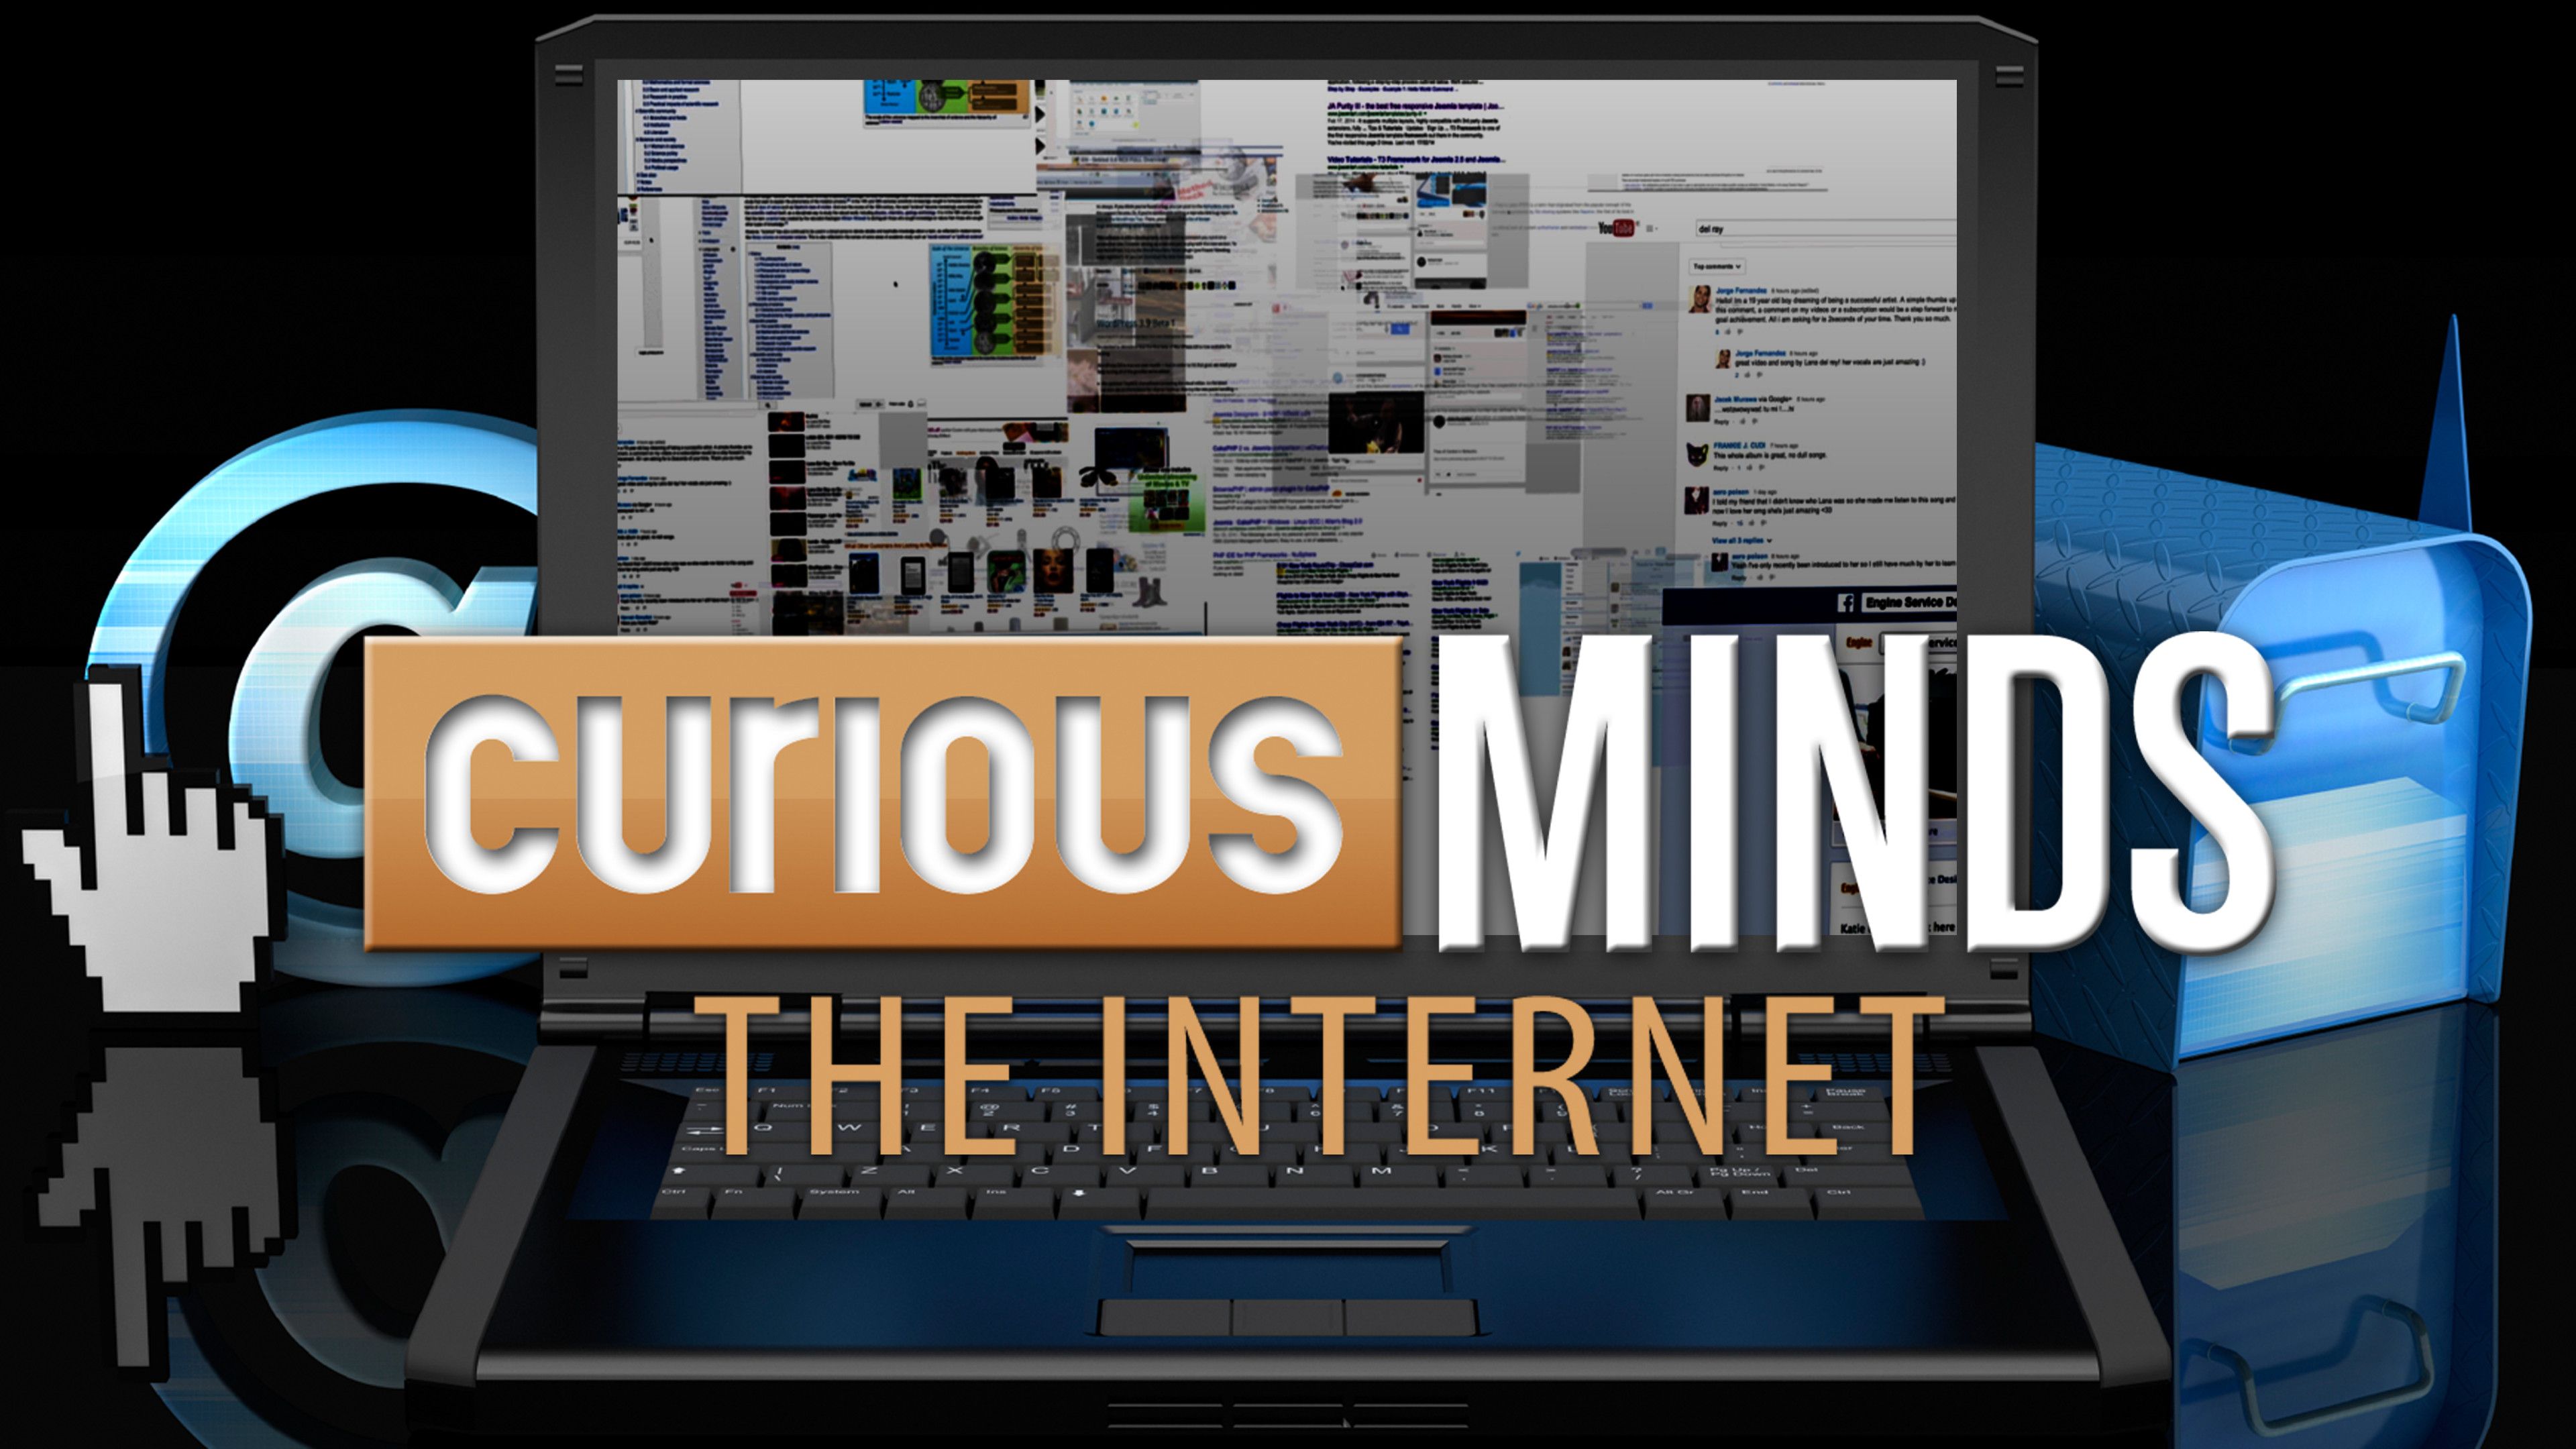 Curious Minds: The Internet